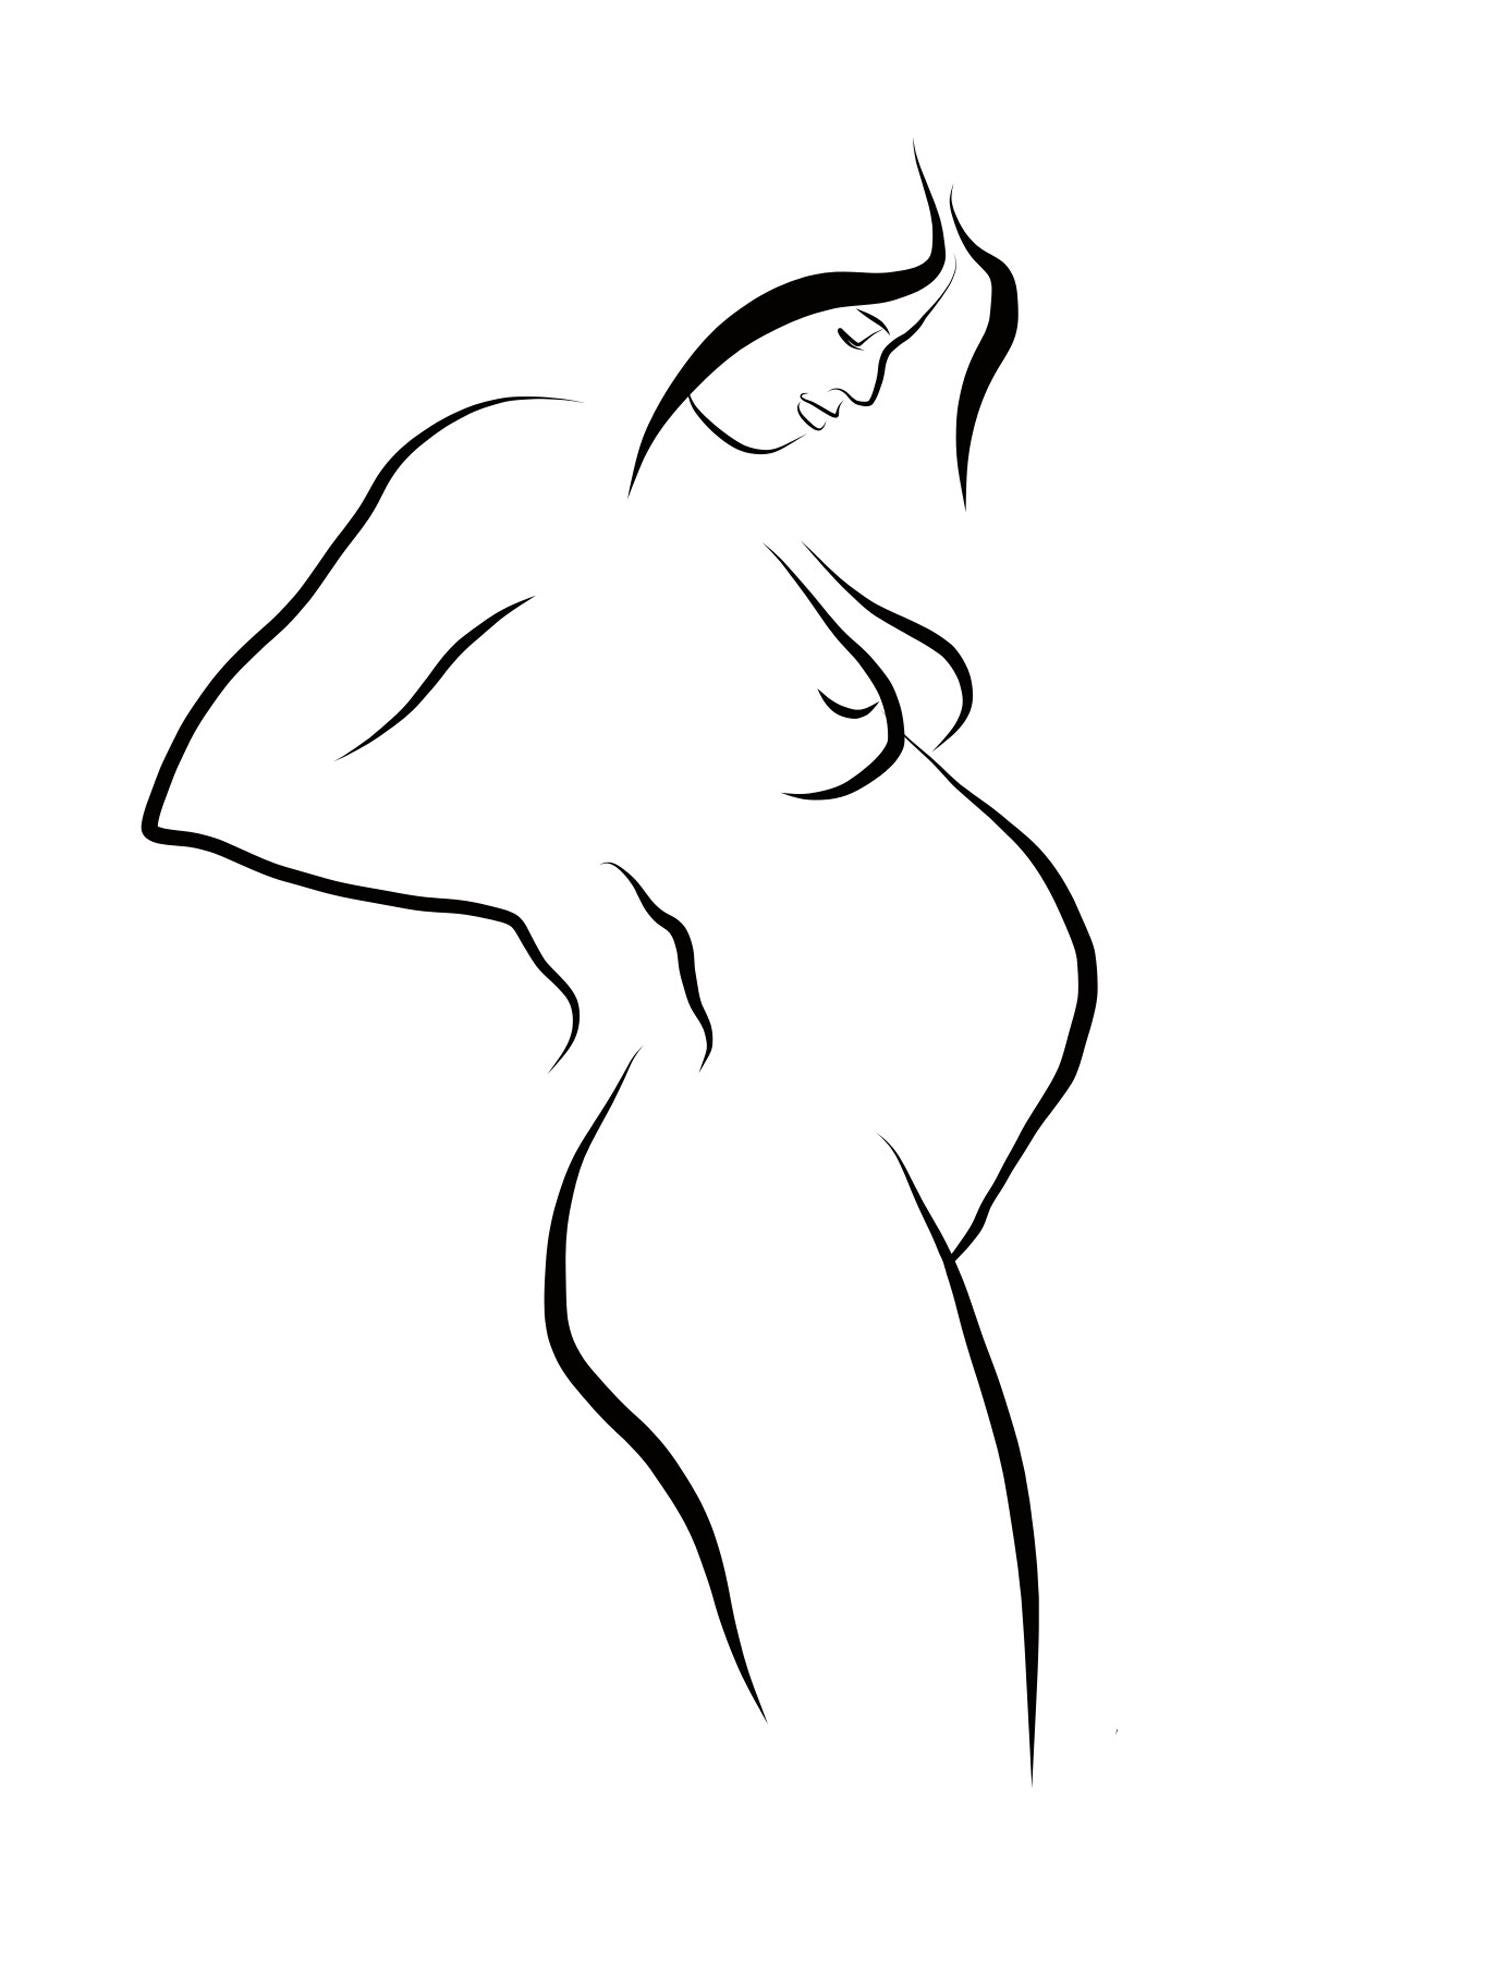 Michael Binkley Nude Print - Haiku #3, 1/50 - Digital Vector B&W Drawing Pregnant Female Nude Woman Figure